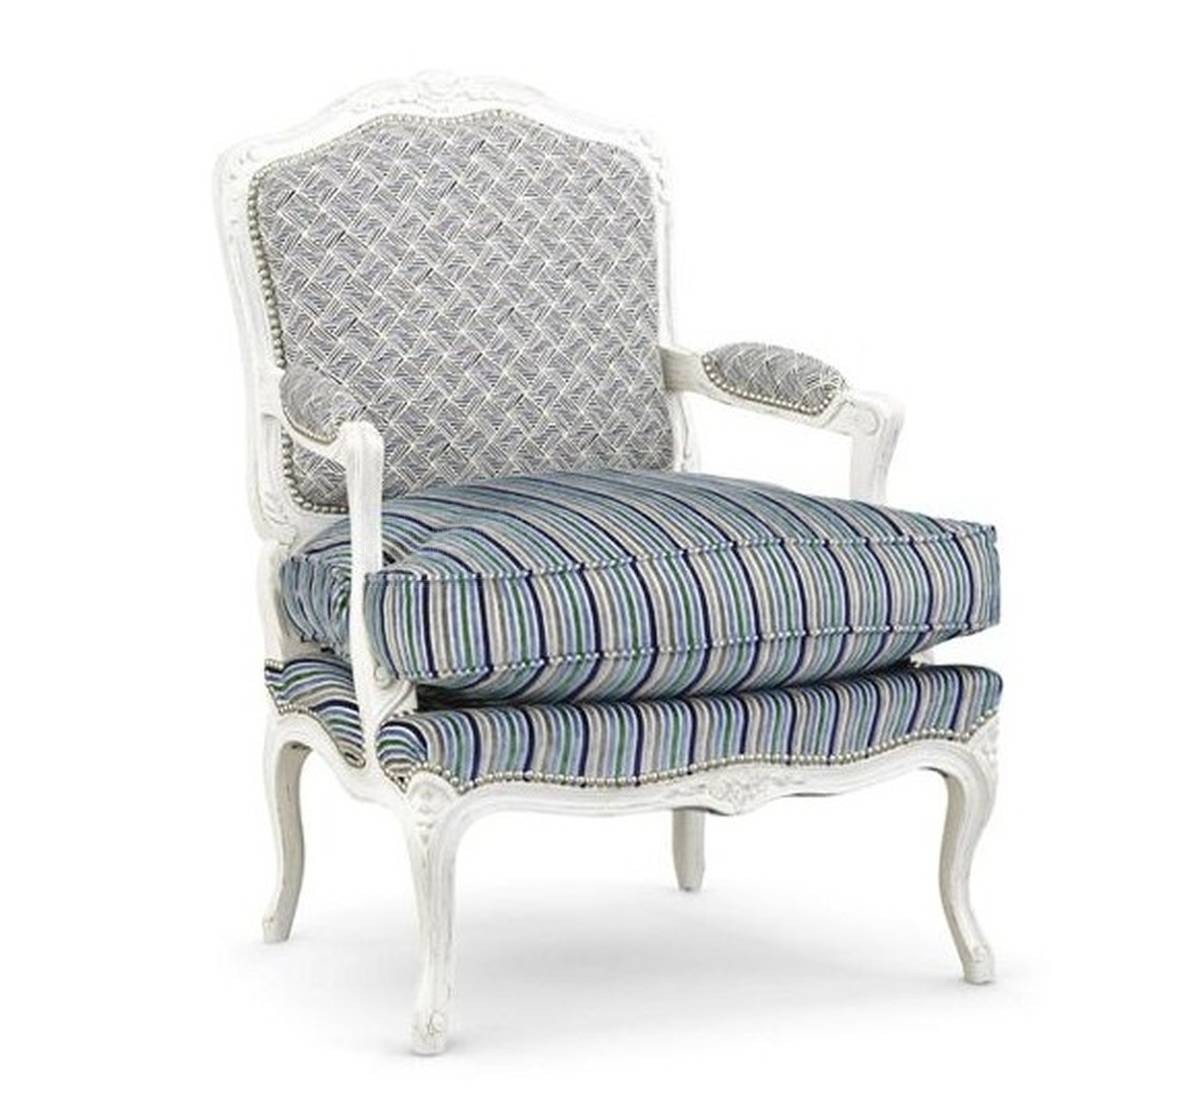 Кресло Sultan armchair из Франции фабрики ROCHE BOBOIS